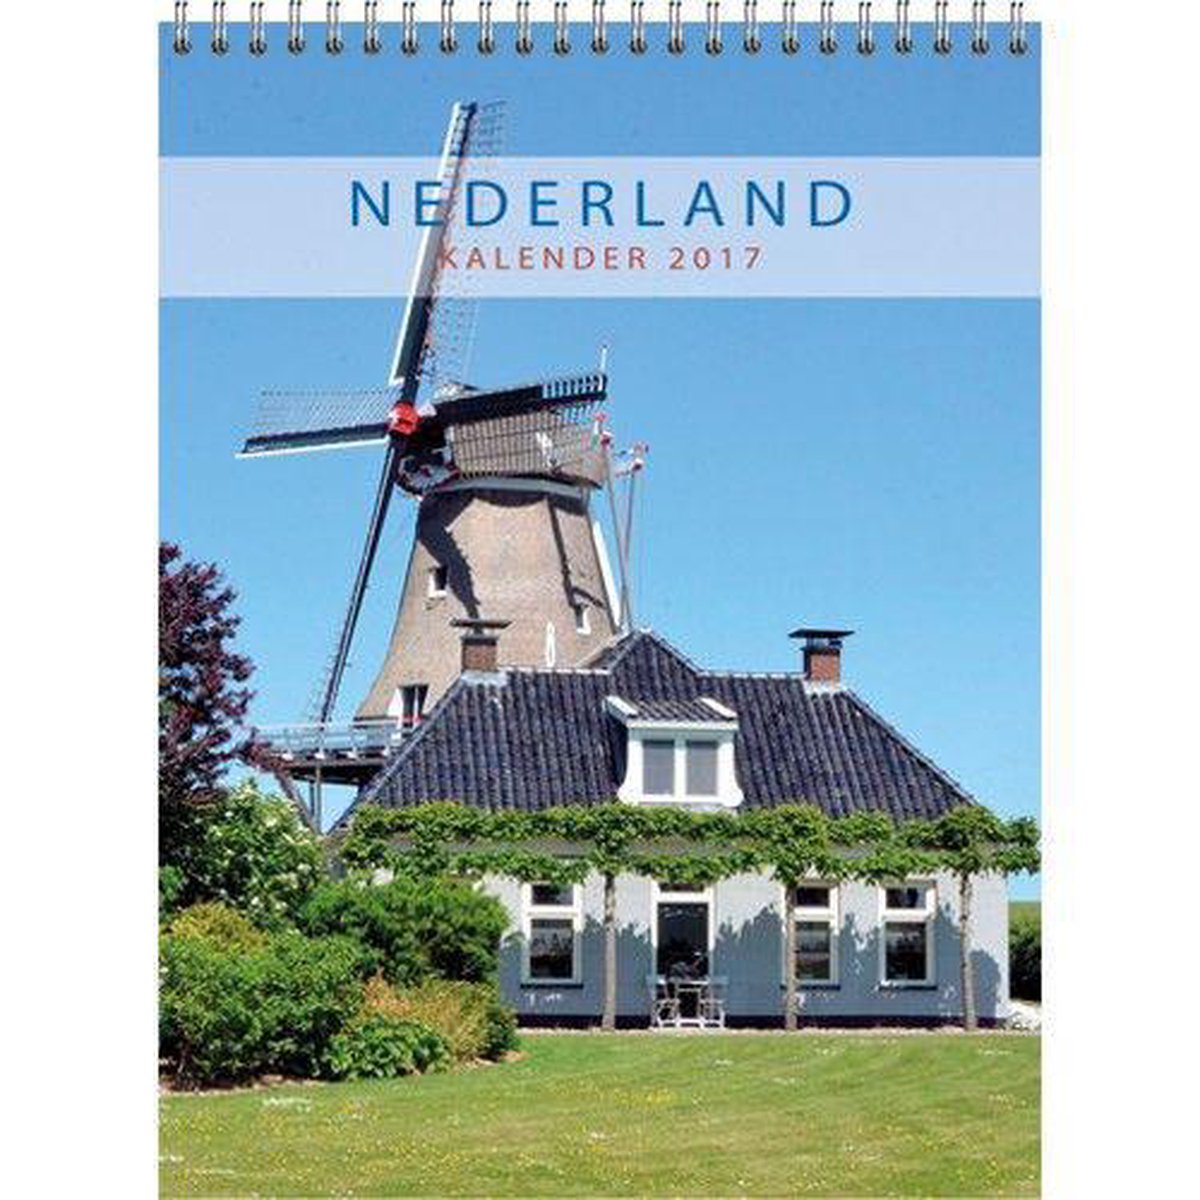 Nederland - maand kalender 2017 bol.com